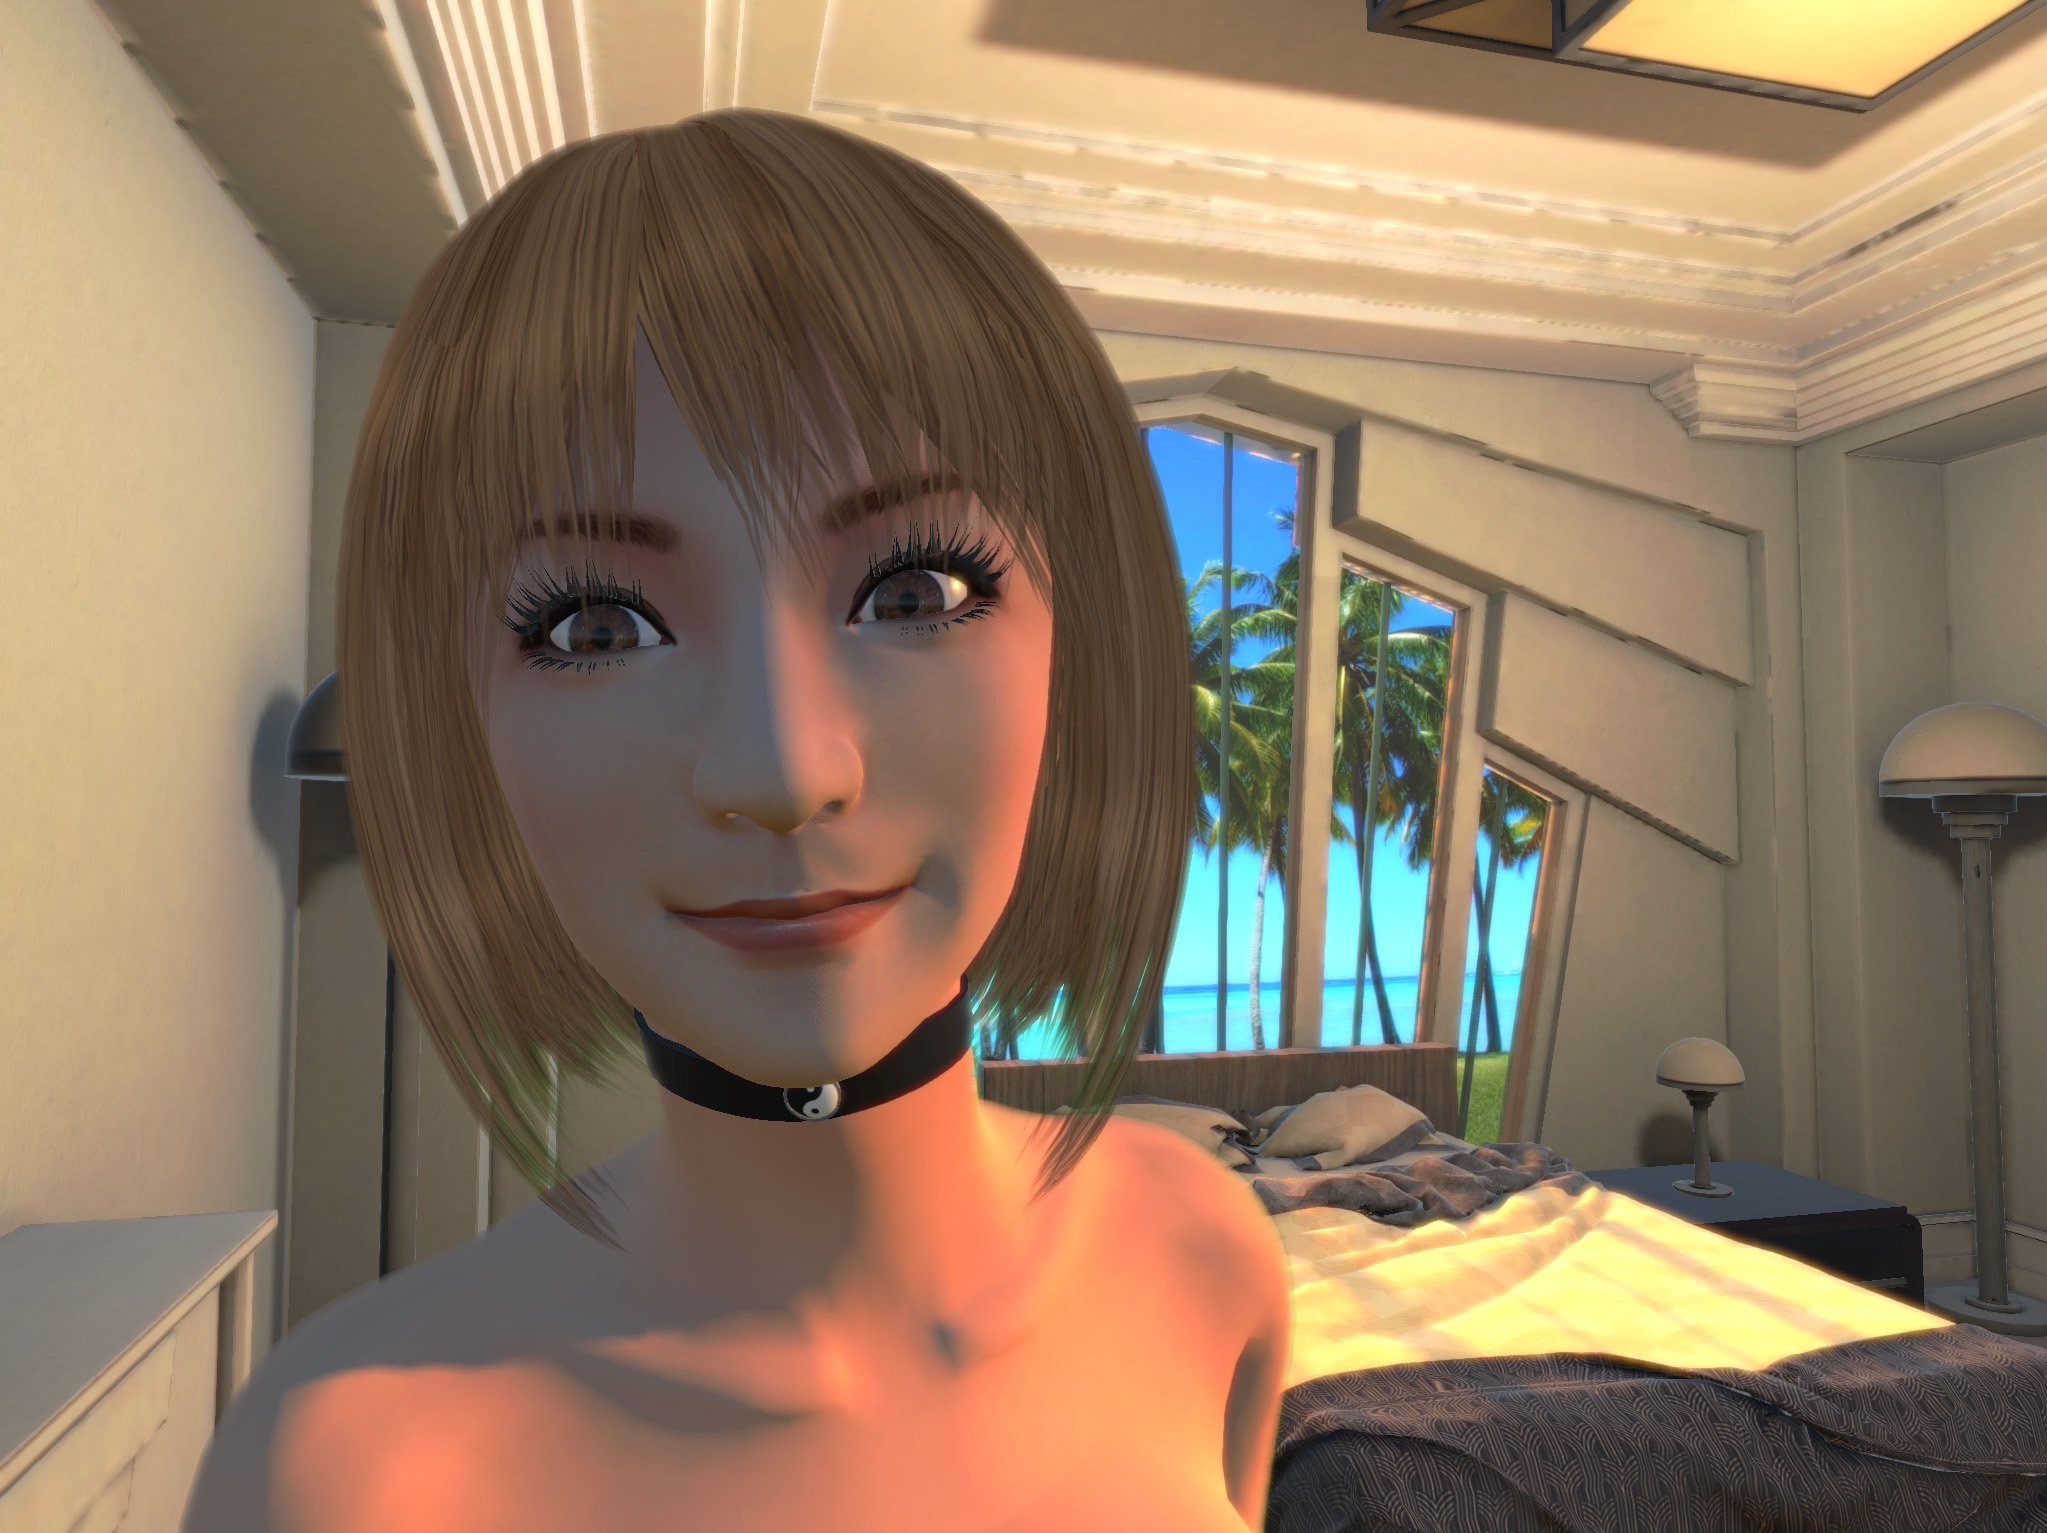 Free virtual interactive sex games